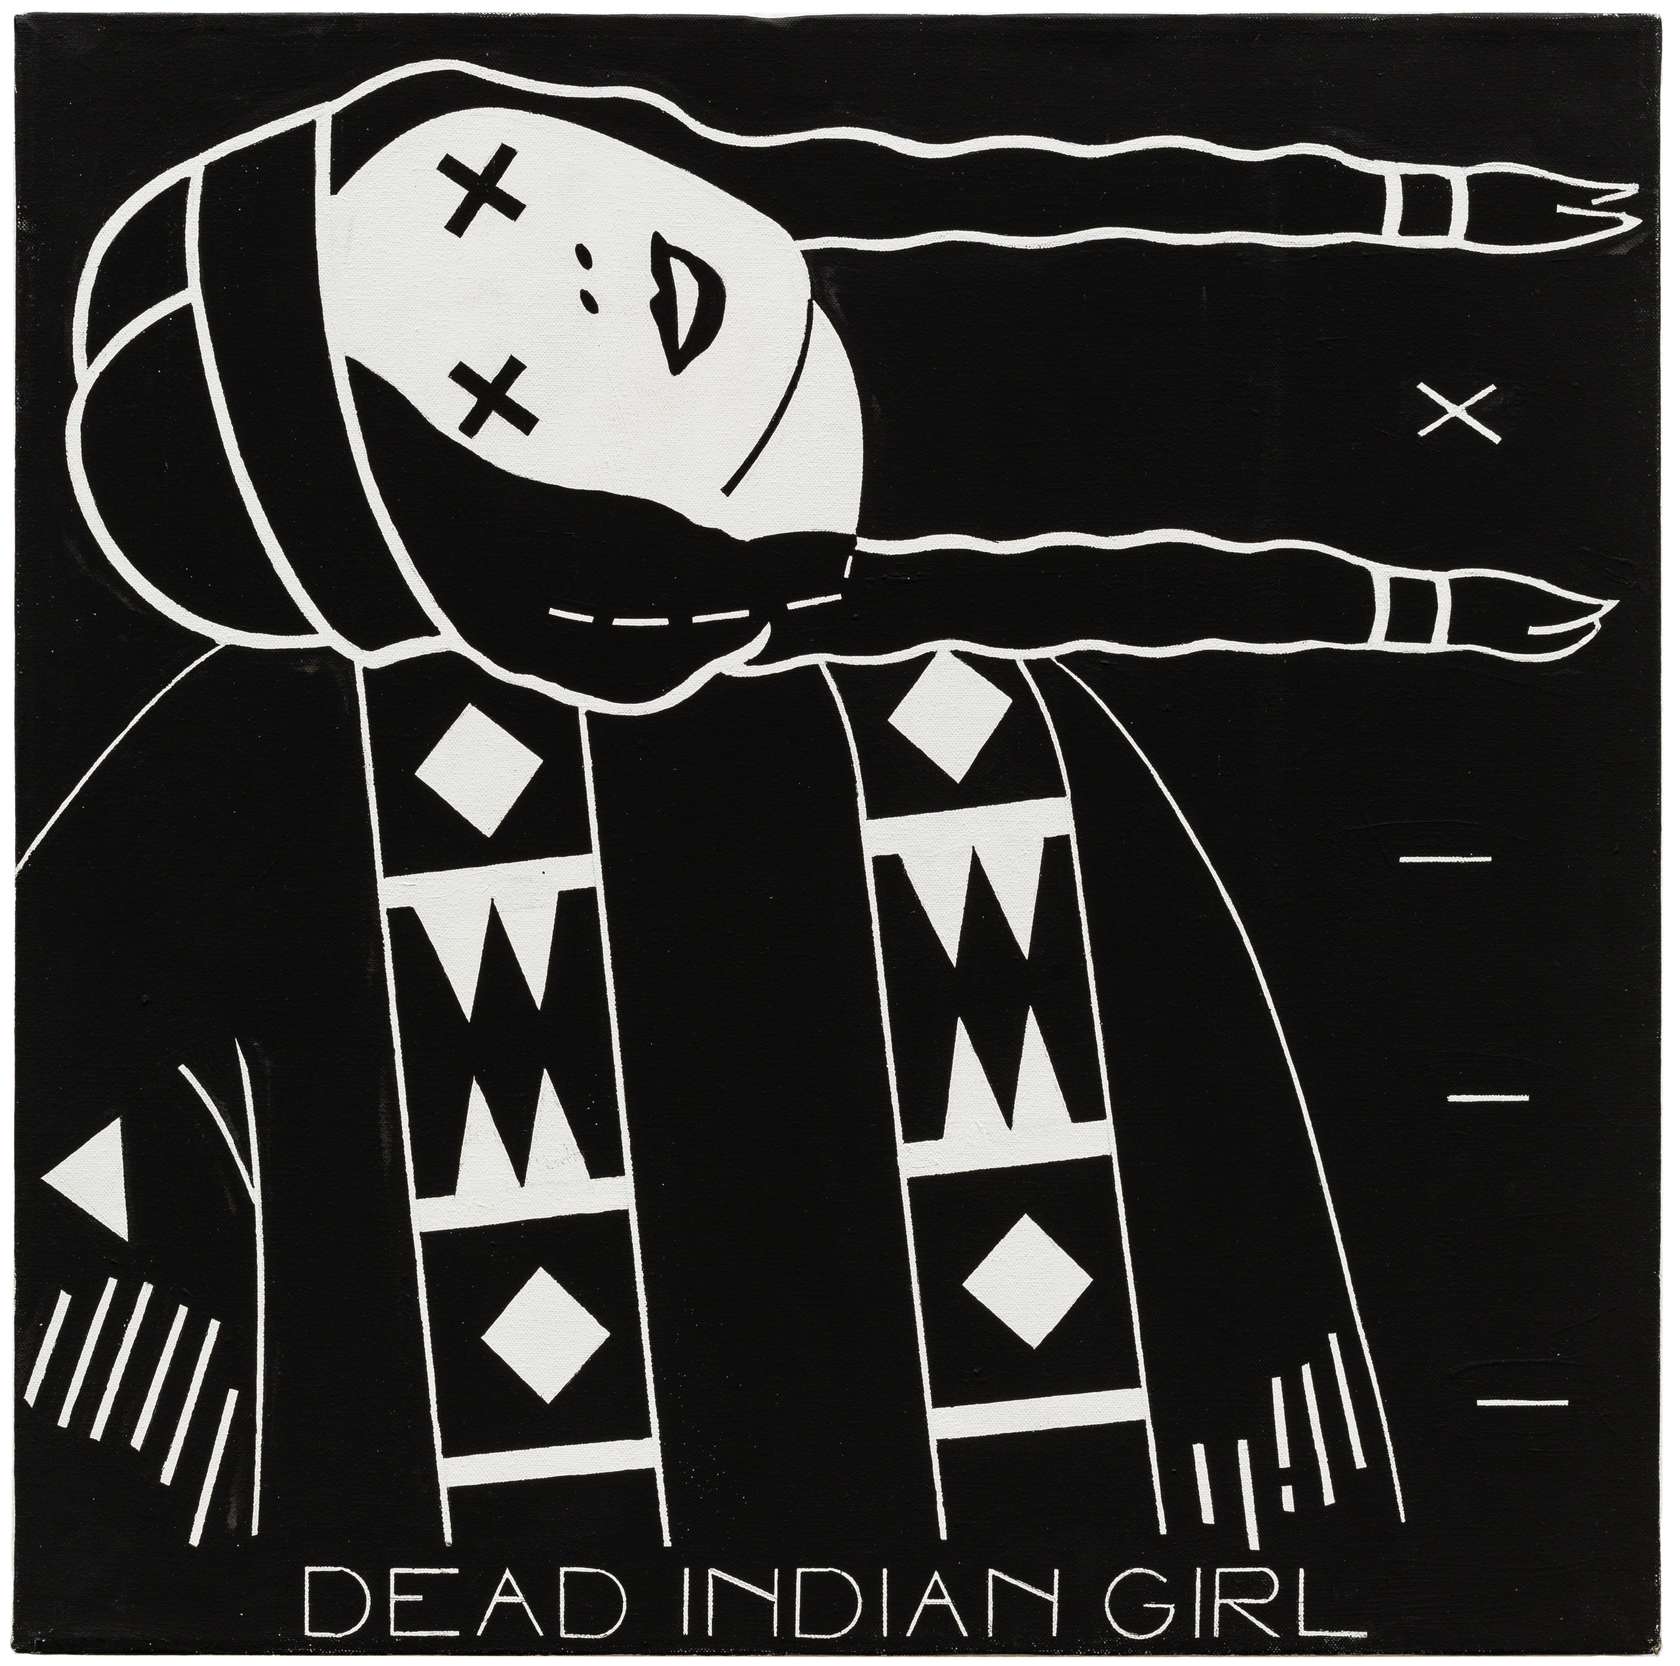 Dead Indian girl